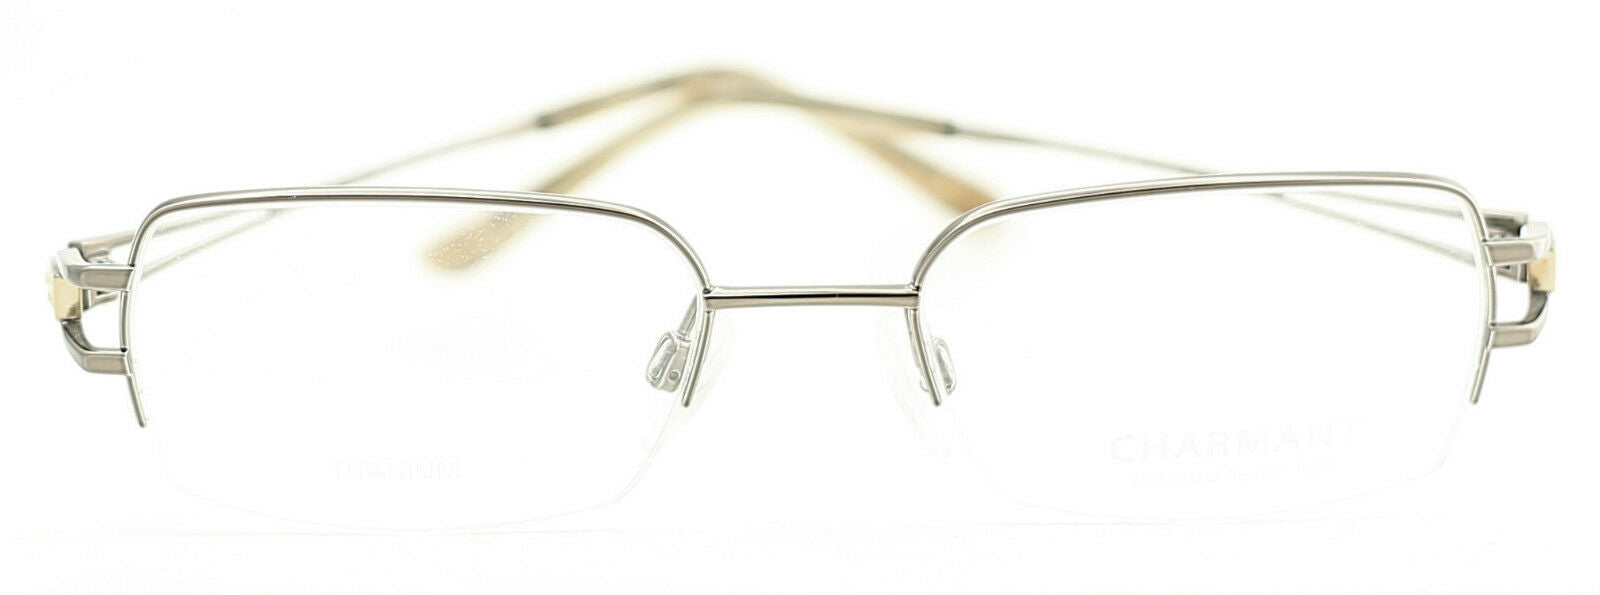 CHARMANT CH8295 BR Titanium Eyewear FRAMES RX Optical Eyeglasses Glasses - New